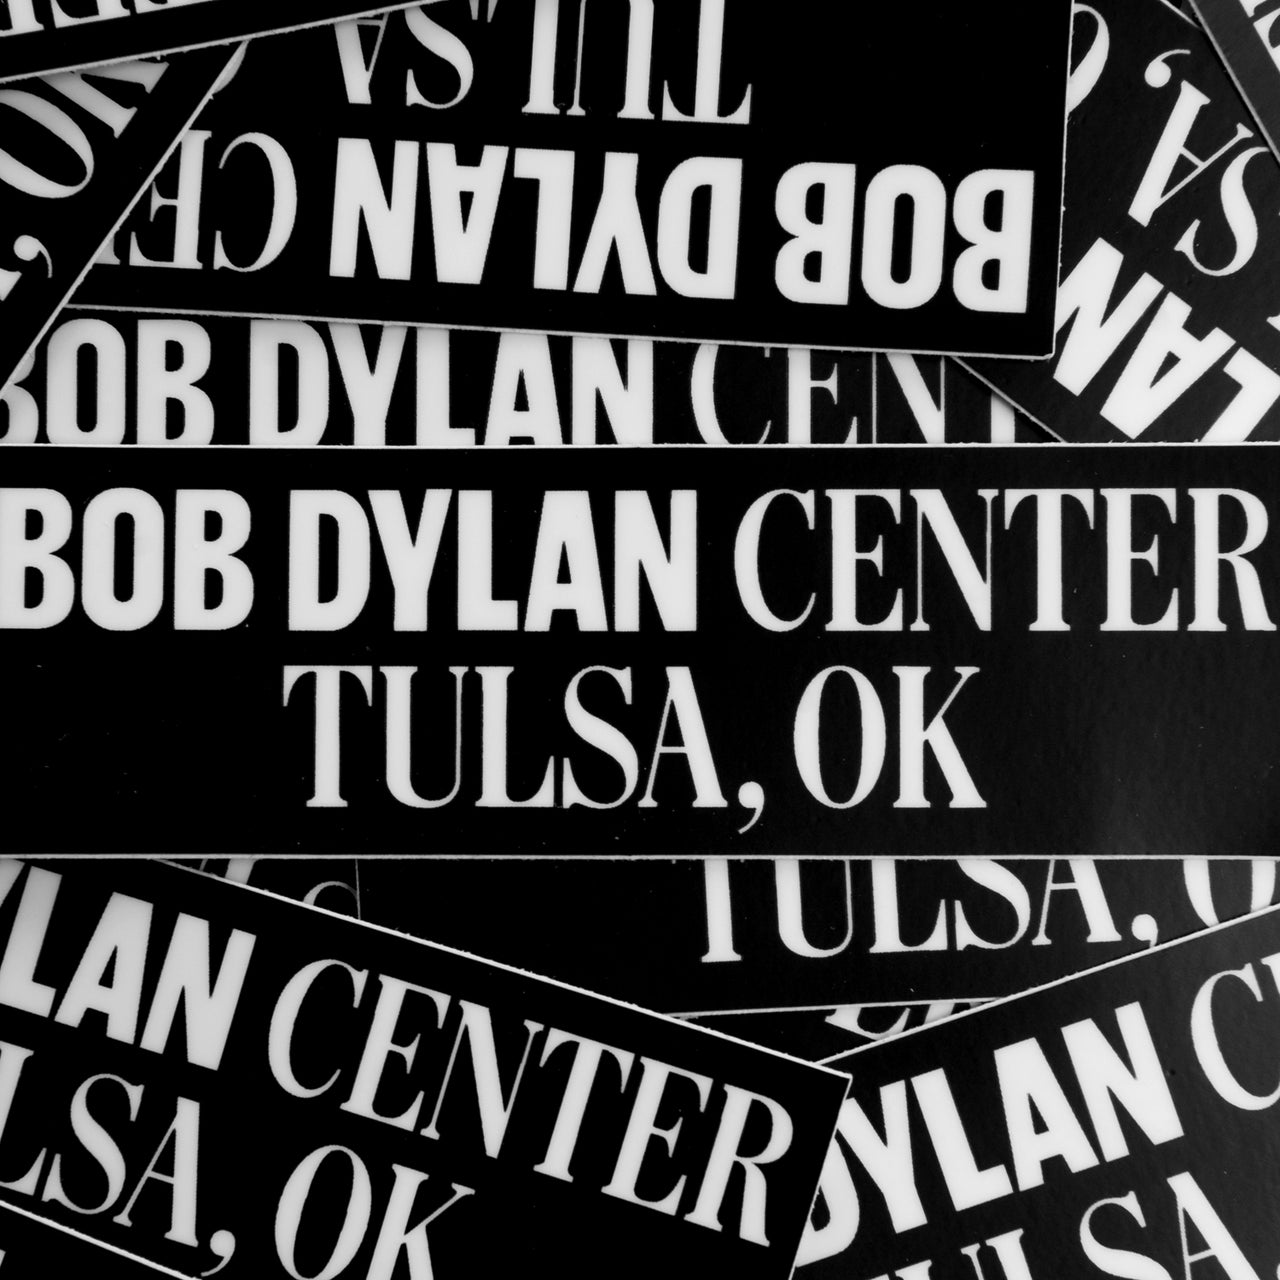 Bob Dylan Center® Logo Sticker